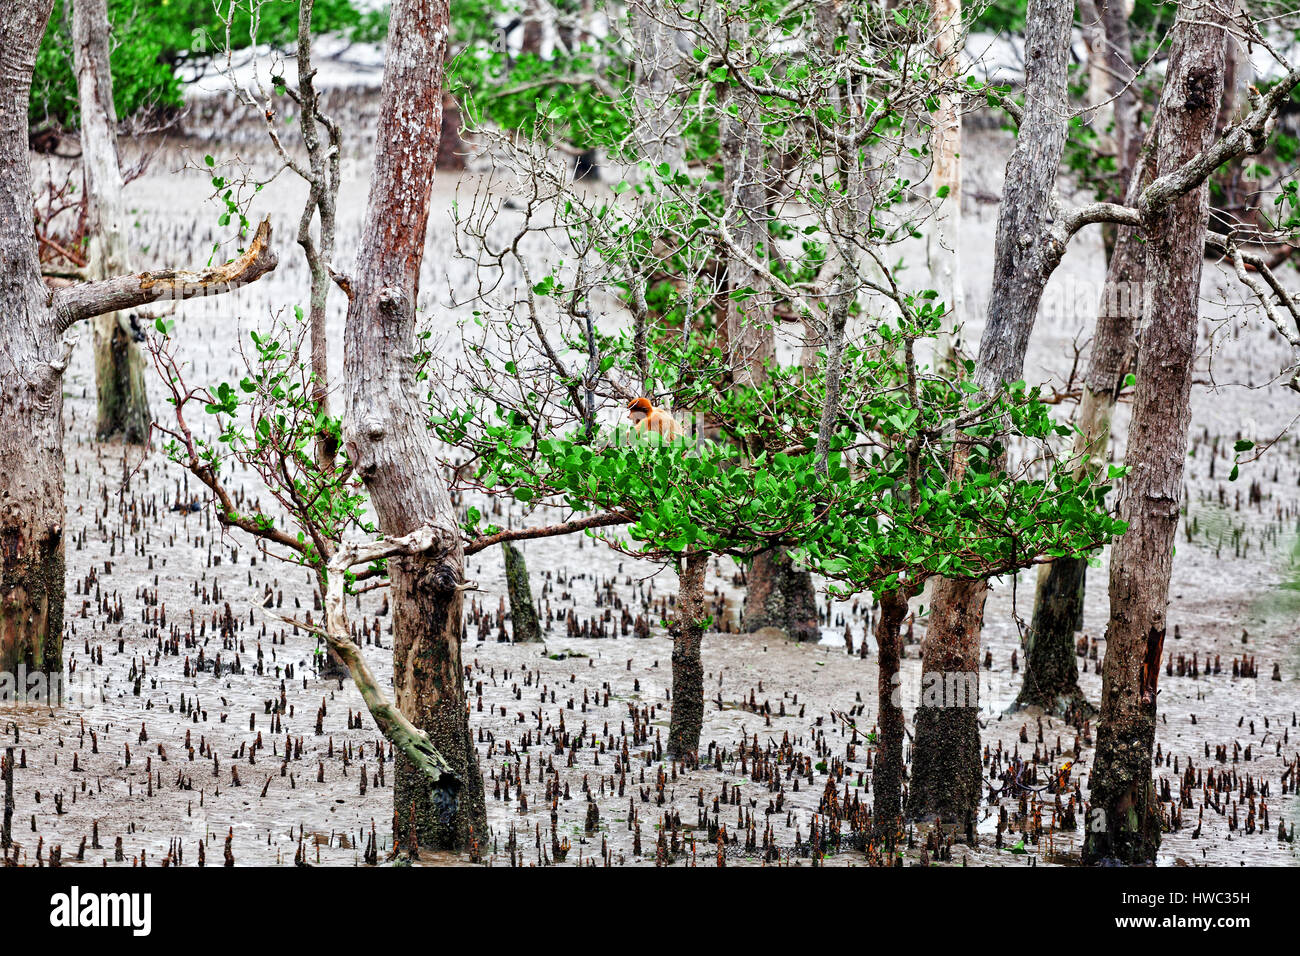 Nasenaffe im Bako Nationalpark, malaysia Stockfoto